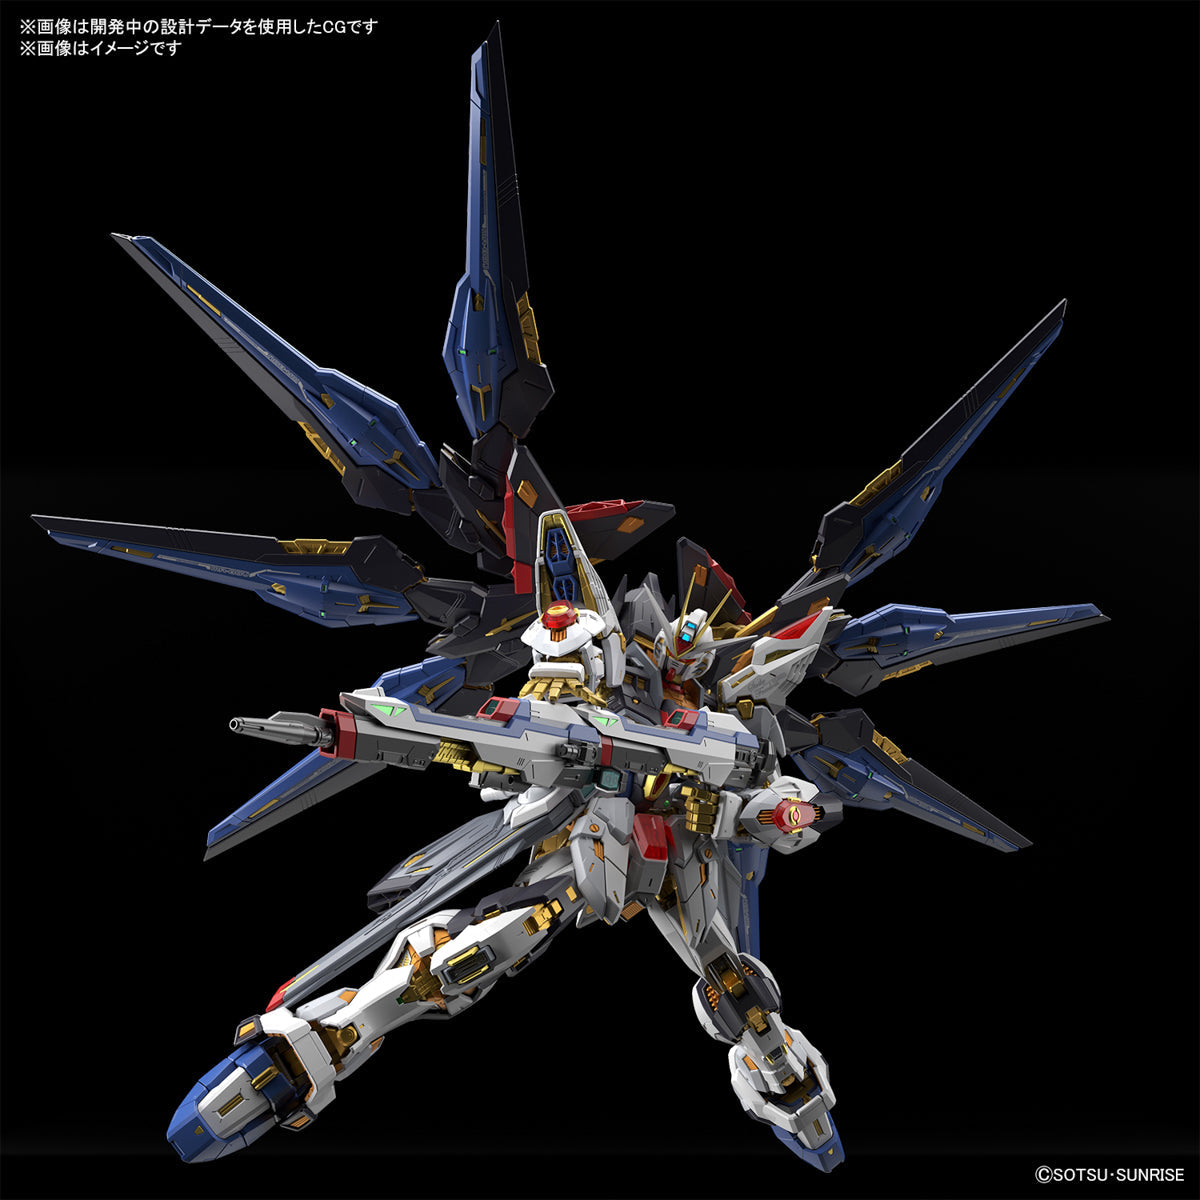 (Pre-Order) "Mobile Suit Gundam Seed Destiny " MGEX - Strike Freedom Gundam